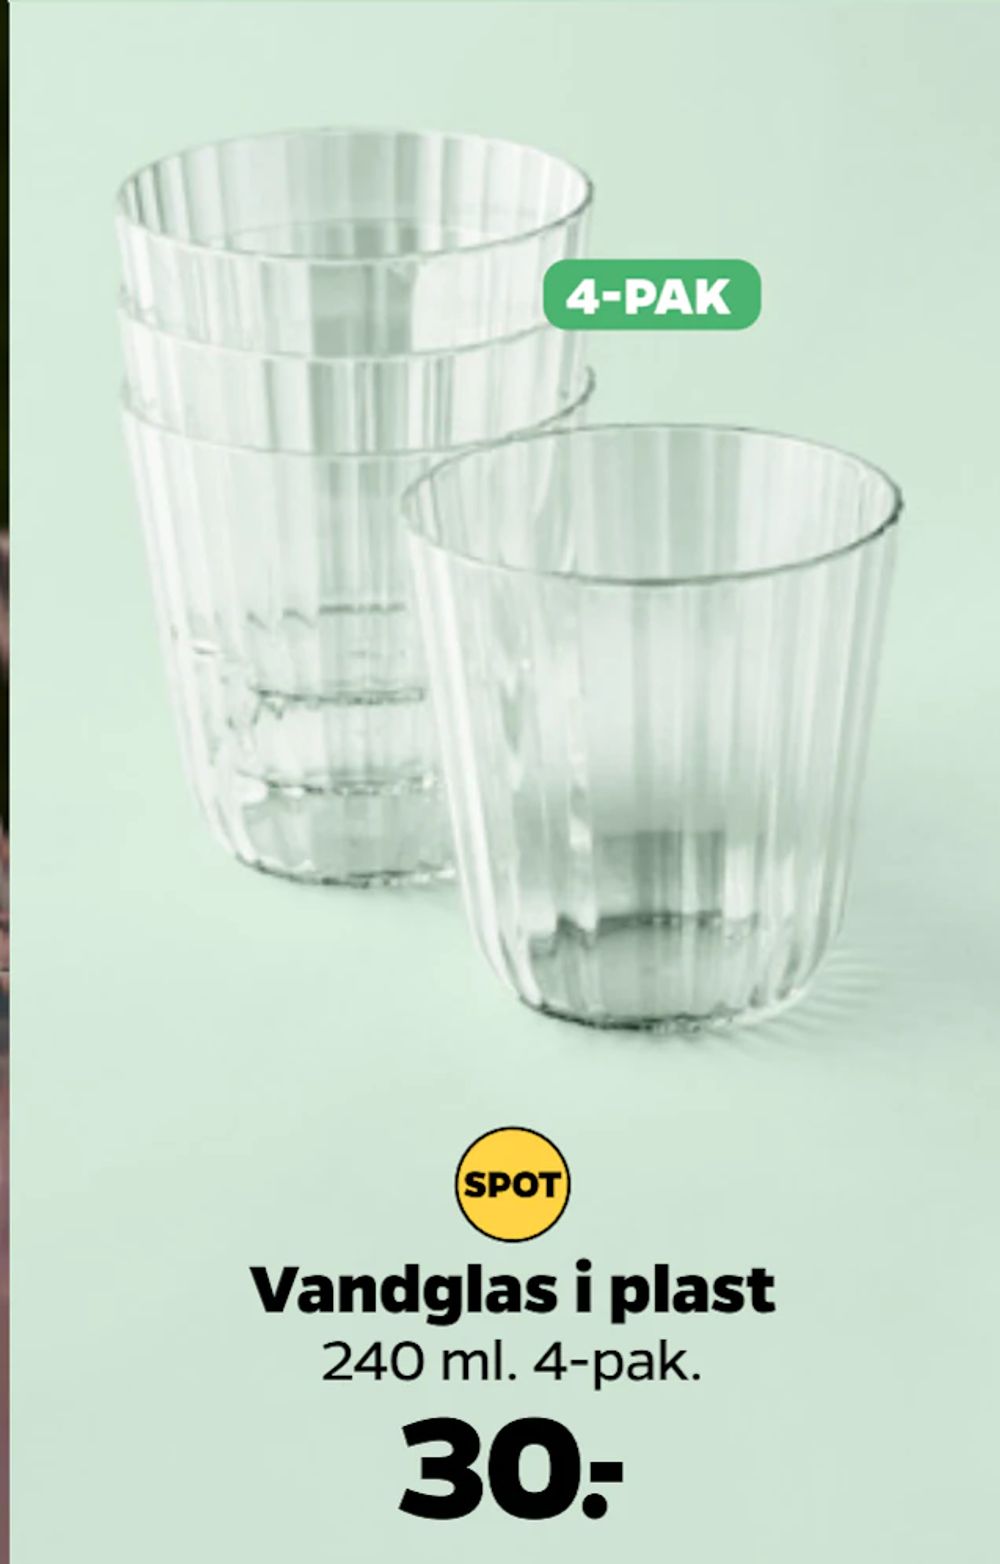 Tilbud på Vandglas i plast fra Netto til 30 kr.